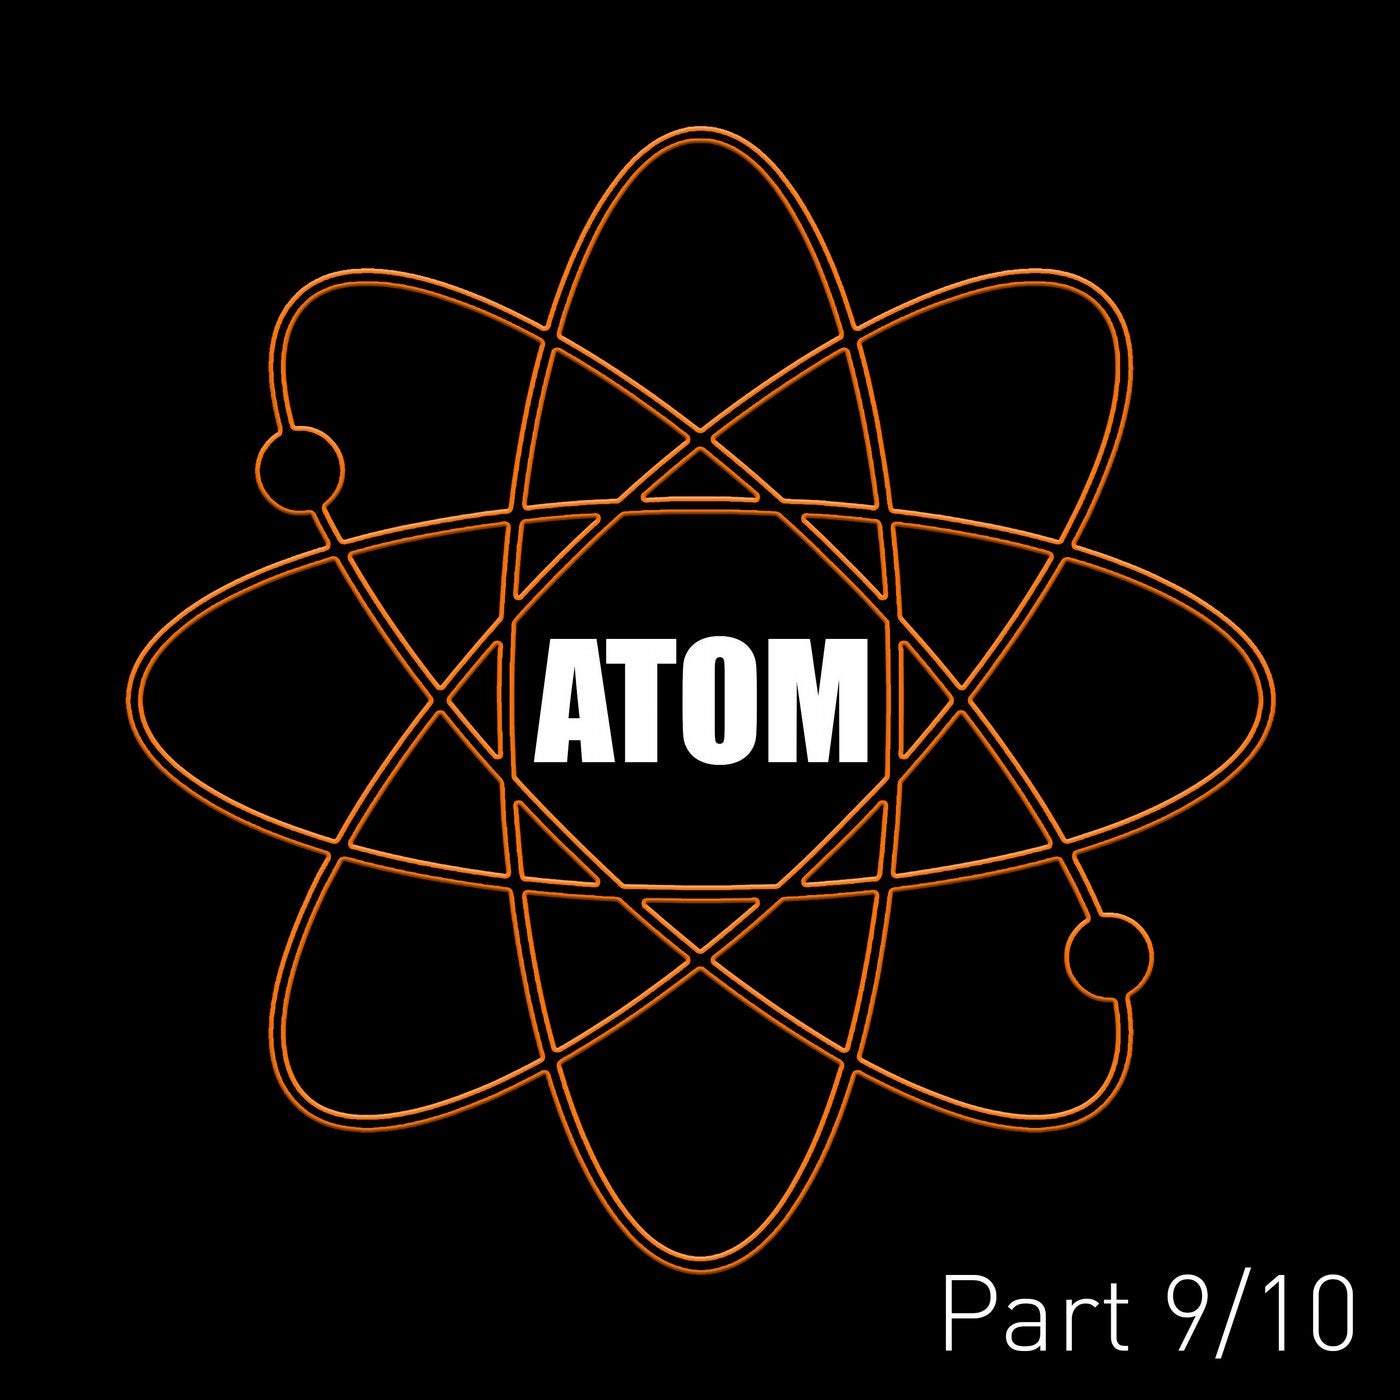 Atom (Pt. 9)